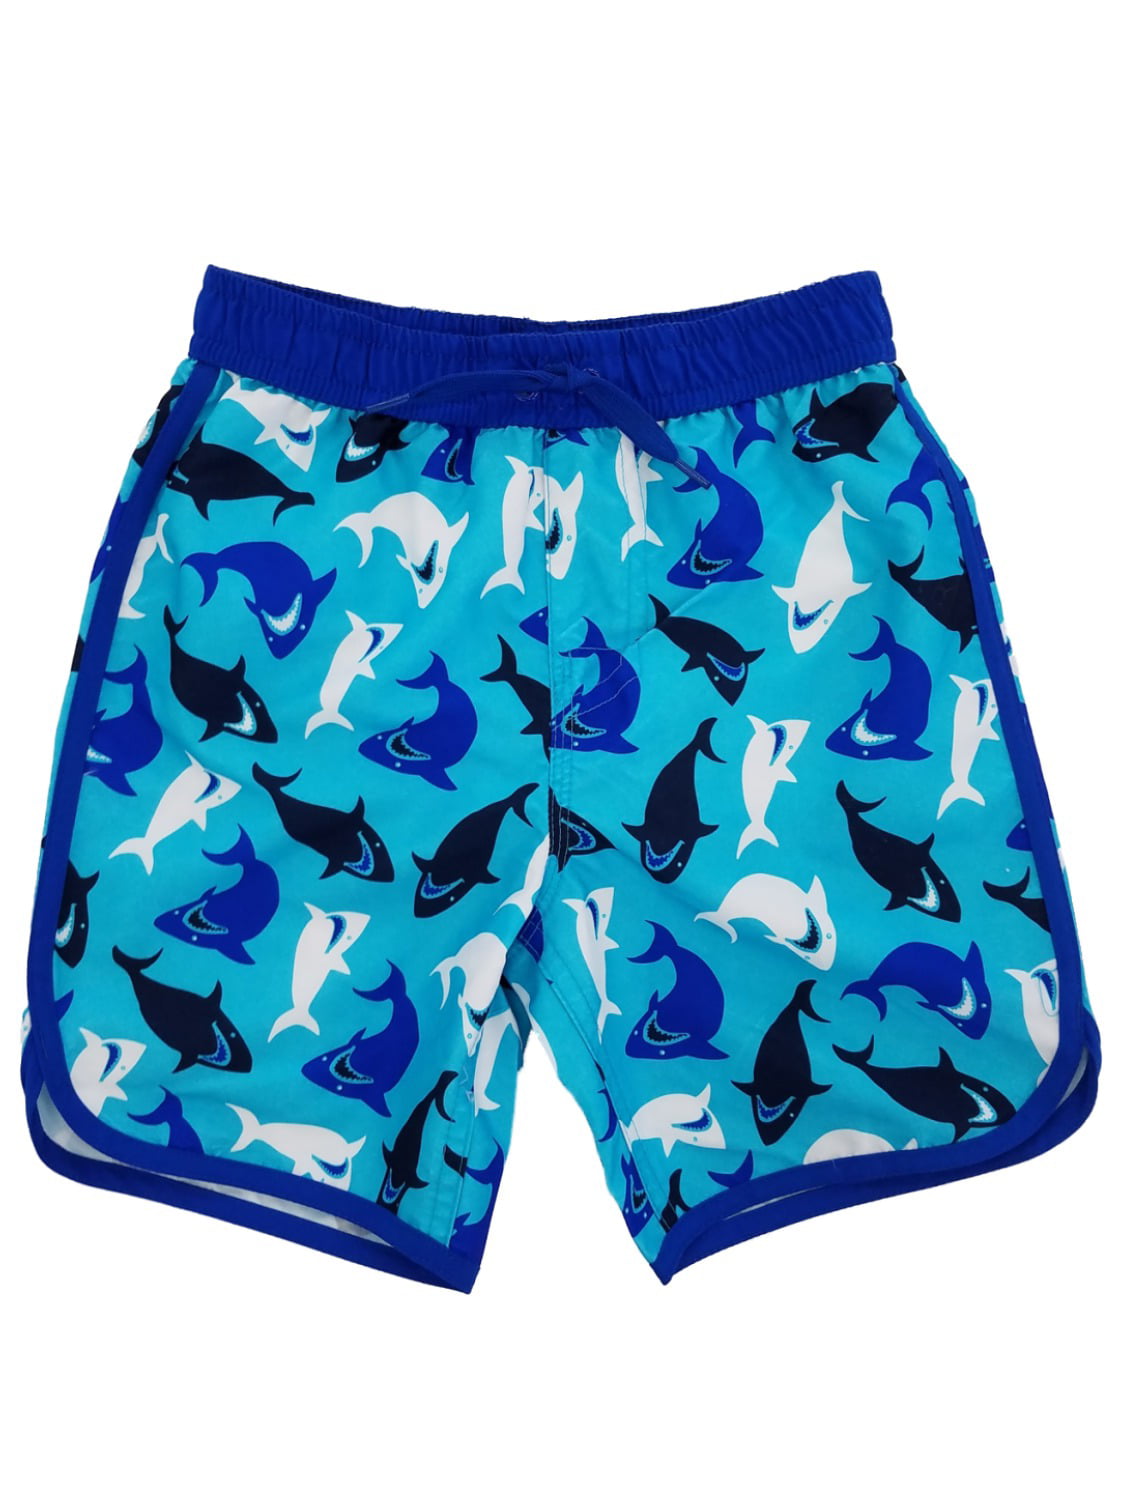 Details about   Op Shark Print Swim Trunks Toddler Boys Board Shorts 2T 4T New 